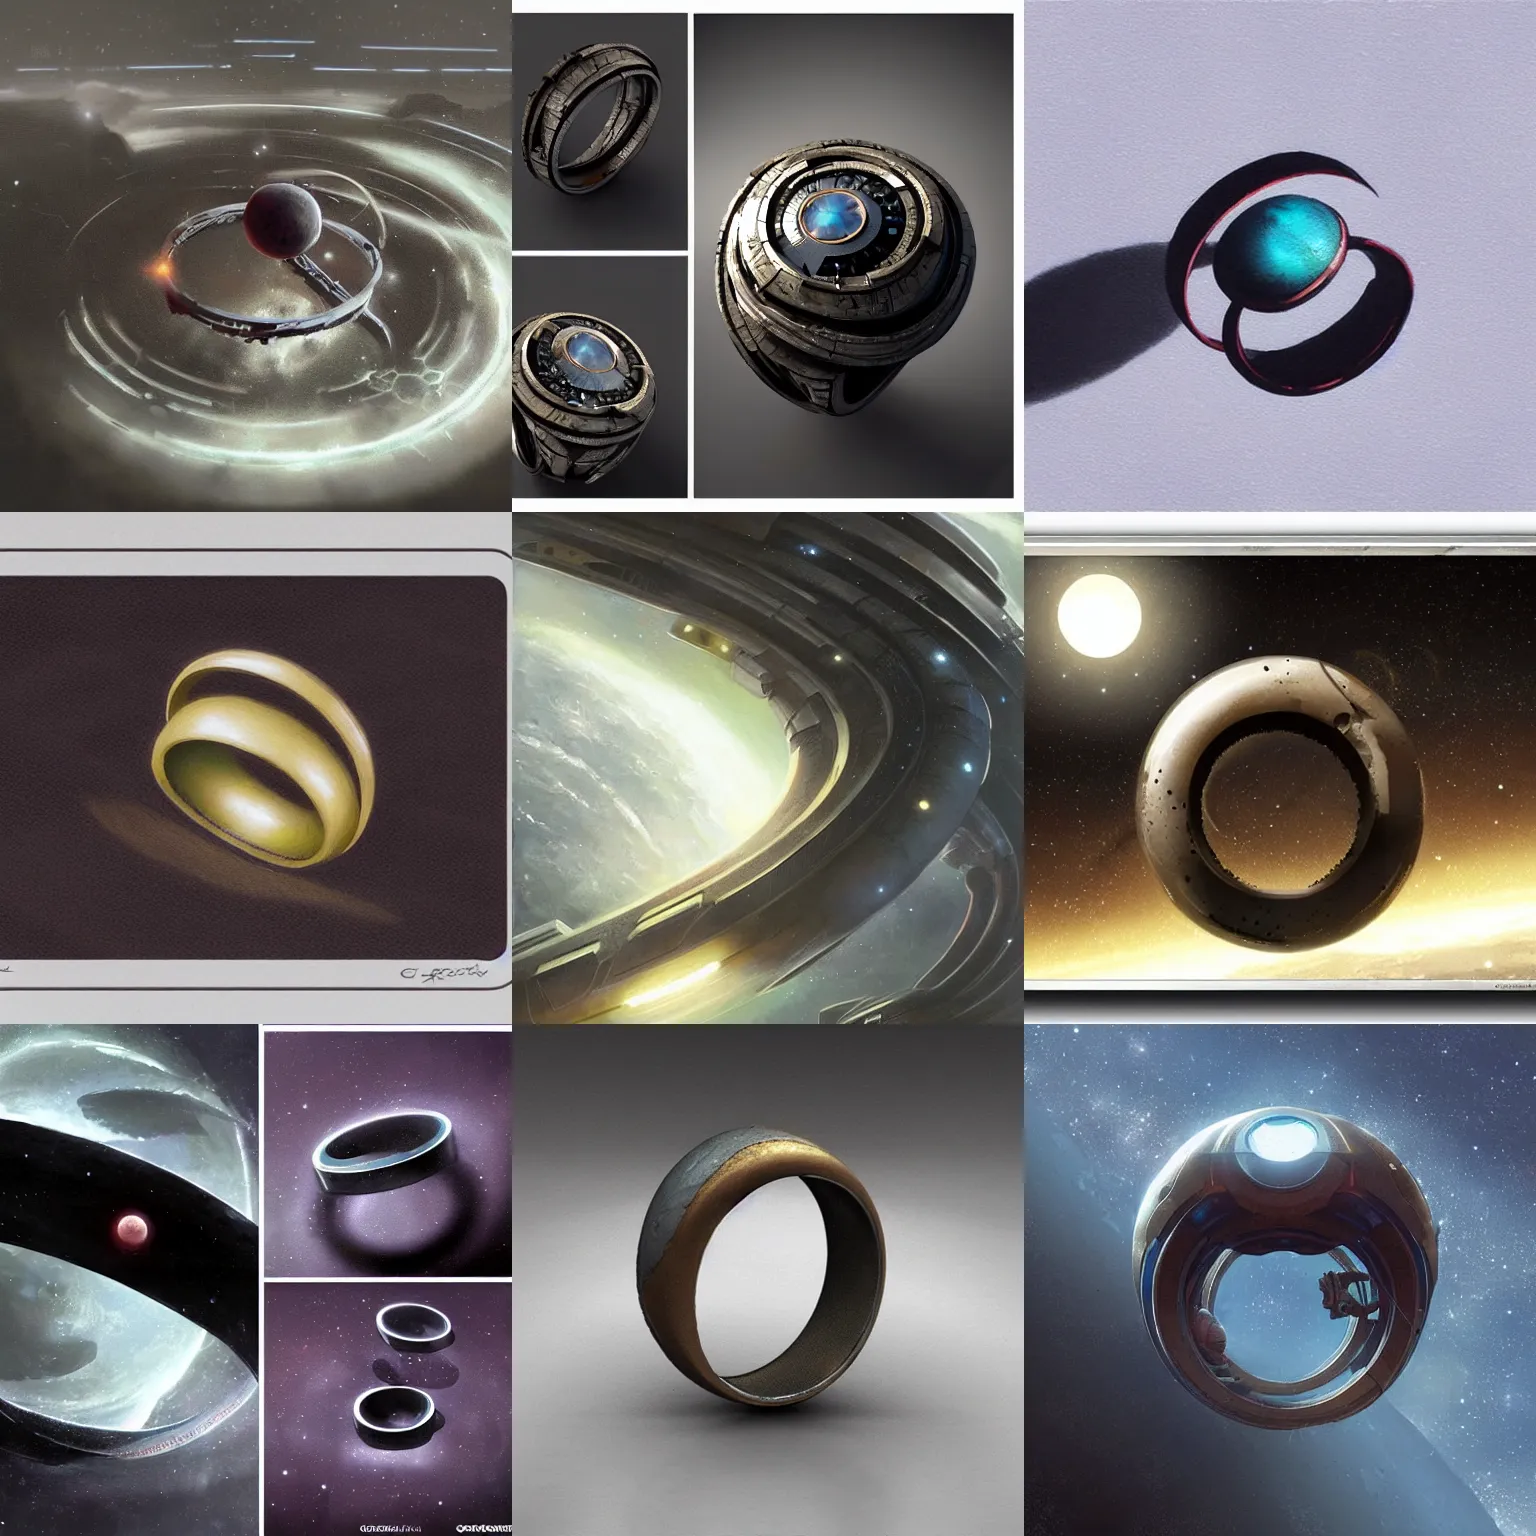 Prompt: a futuristic planetary ring, highly detailed, smooth, sharp, award winning art by greg rutkowski